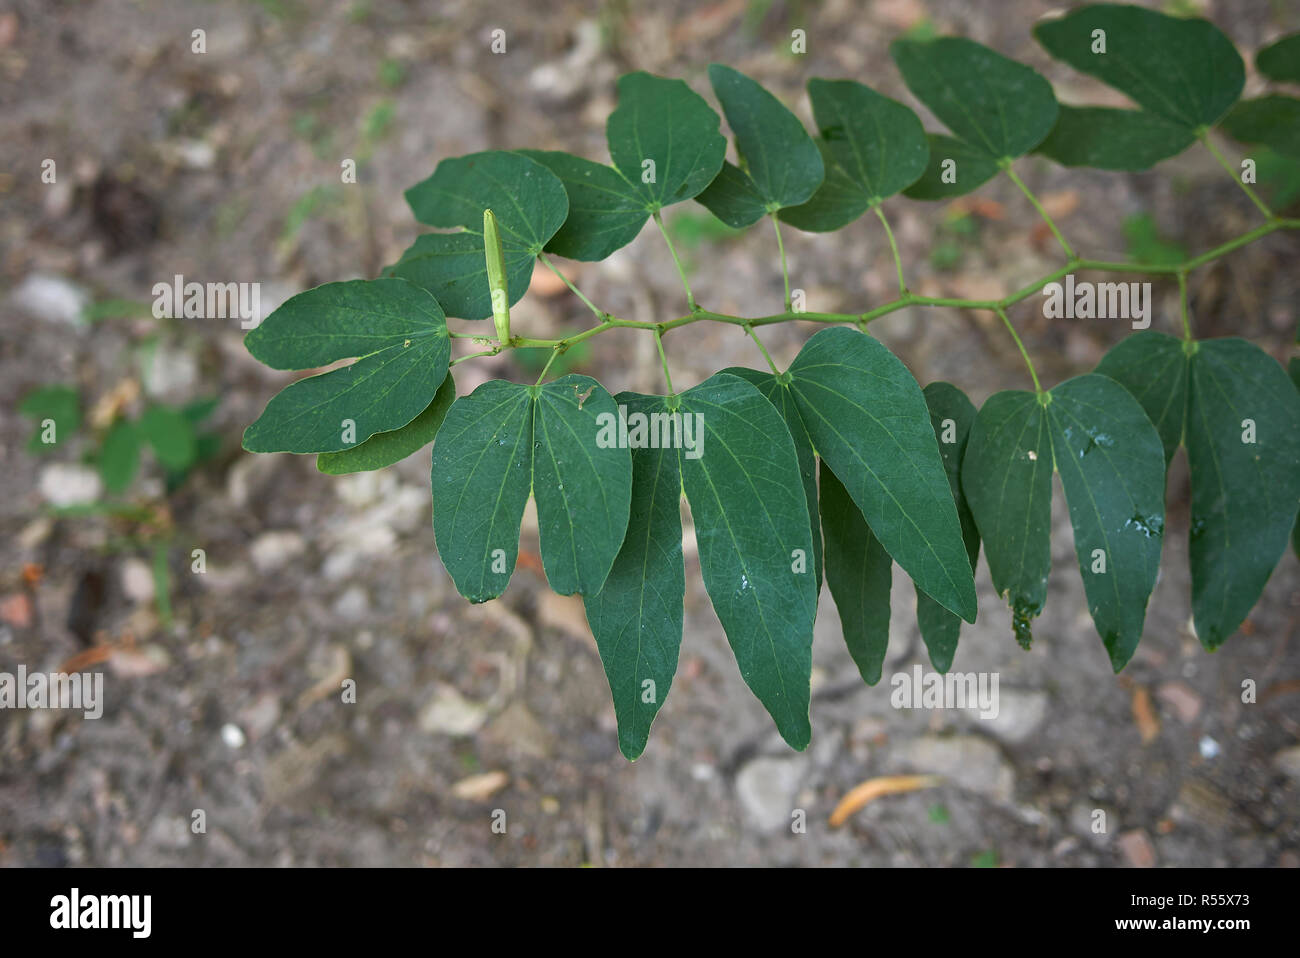 Bauhinia tree fresh leaves Stock Photo